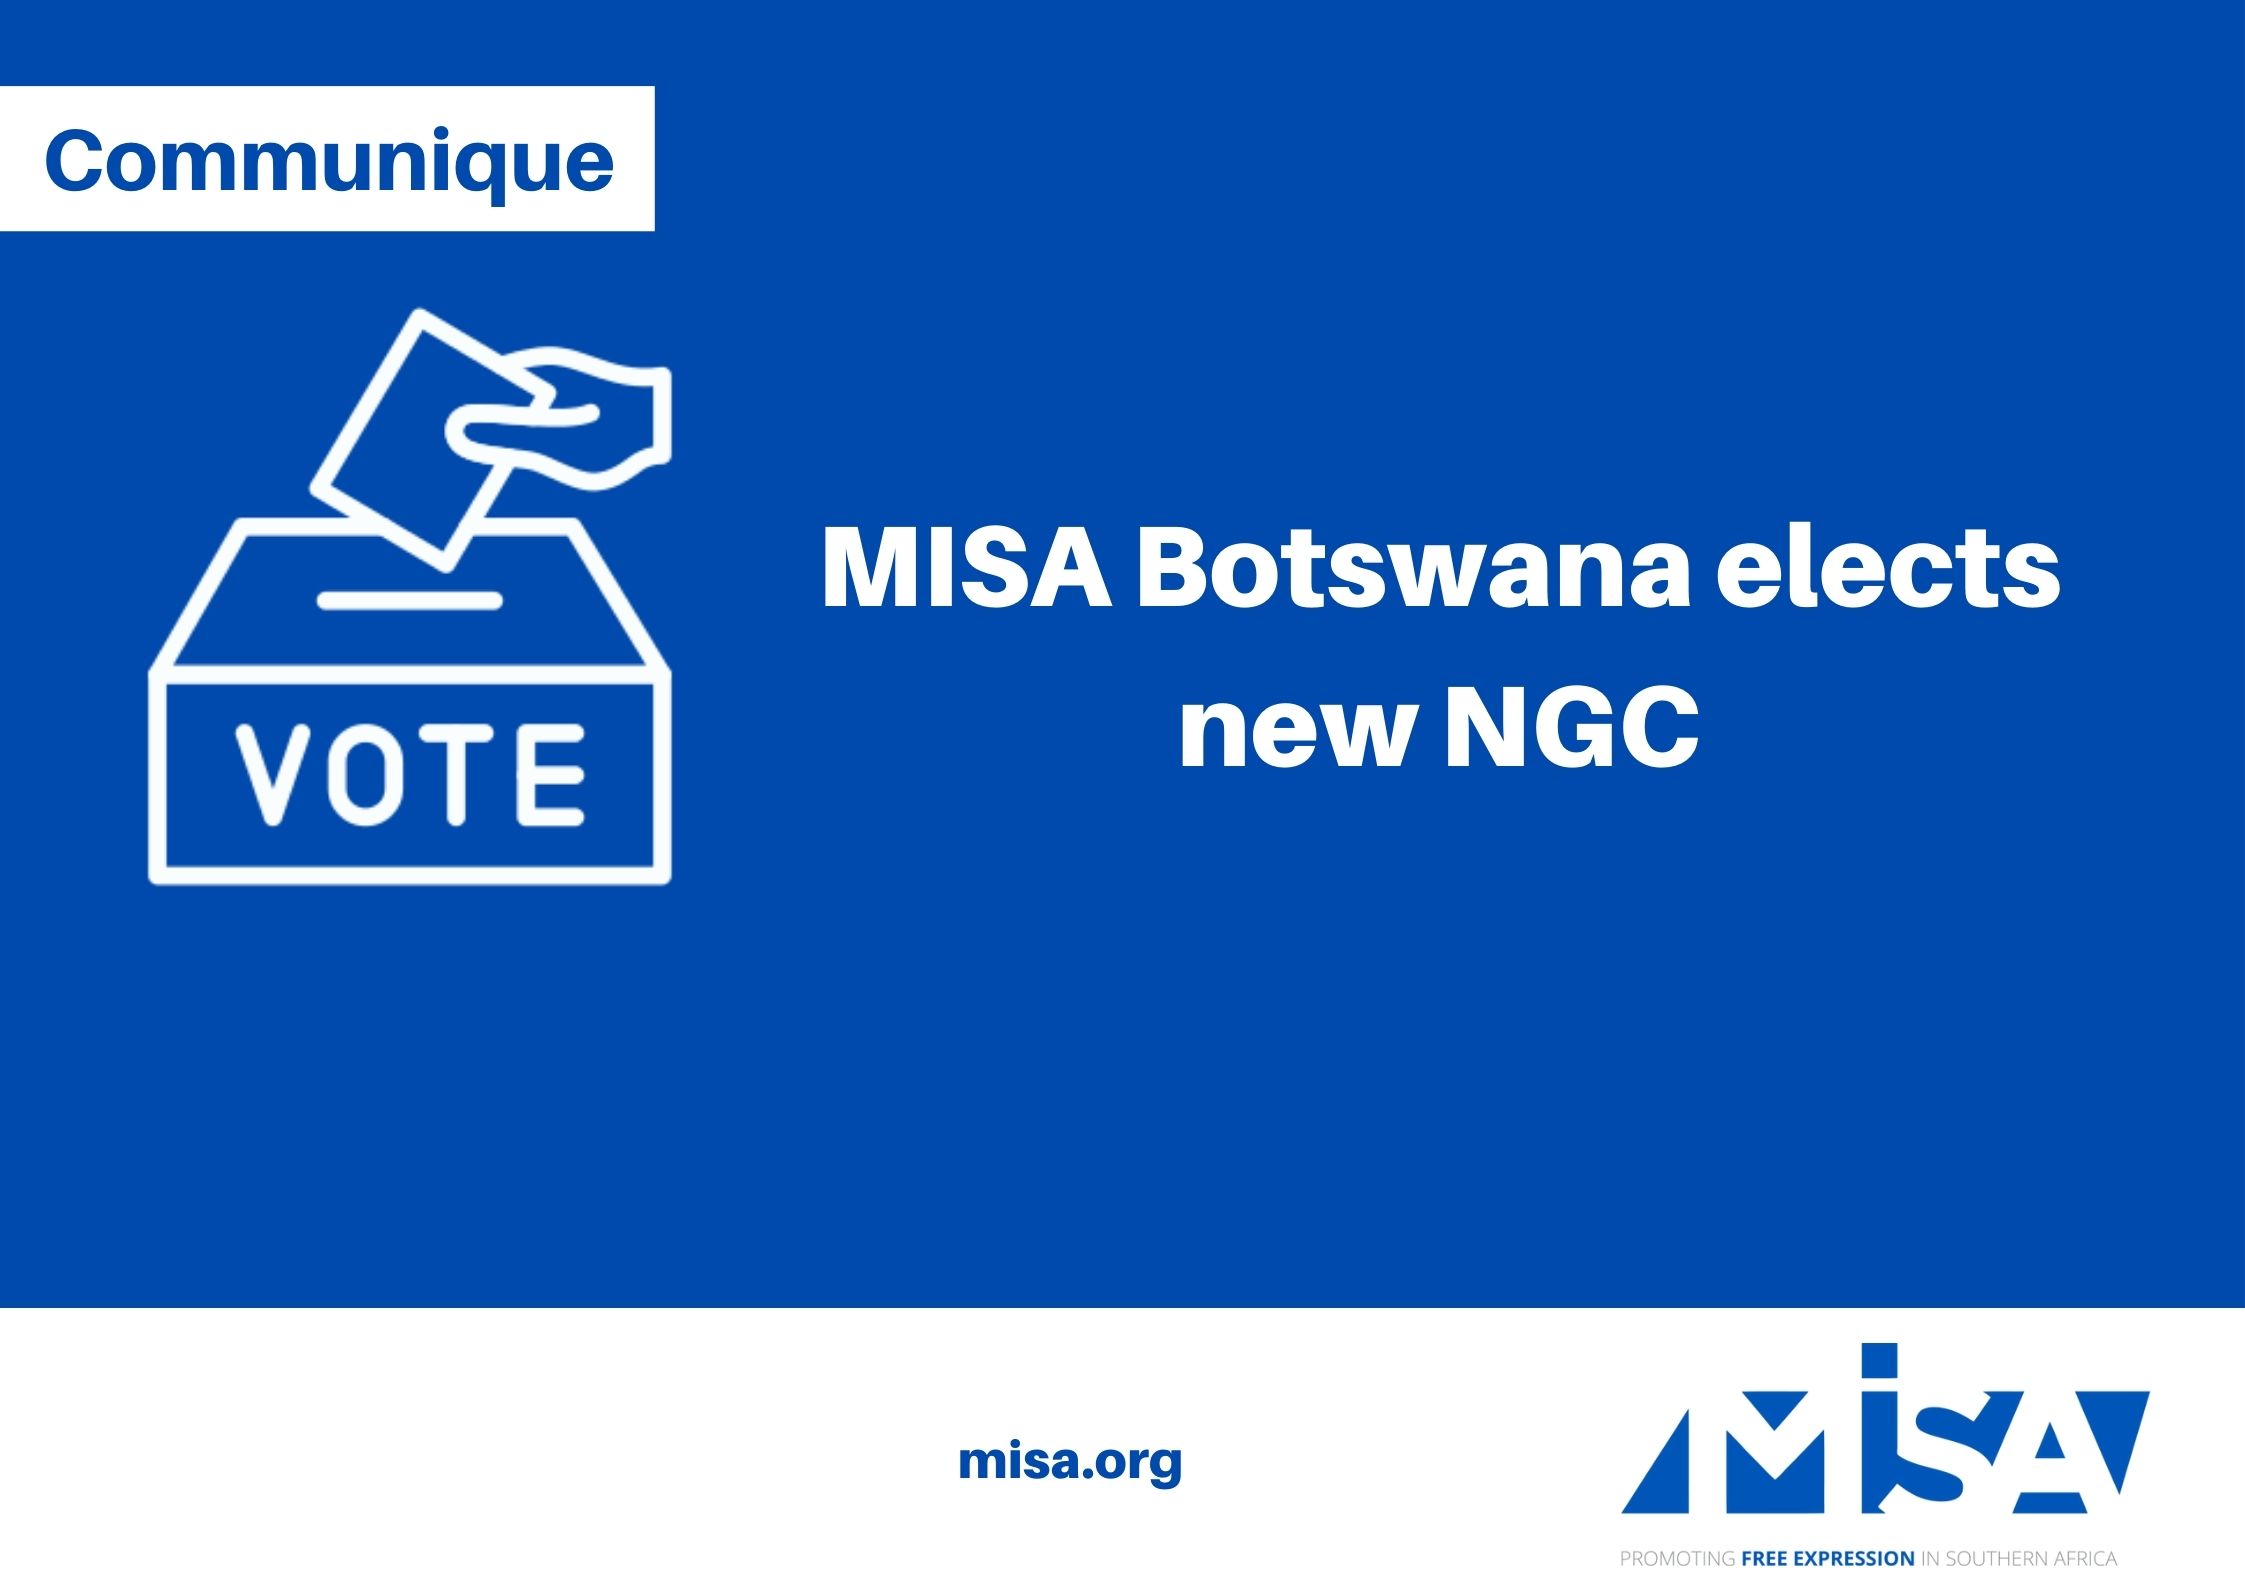 MISA Botswana elects new NGC